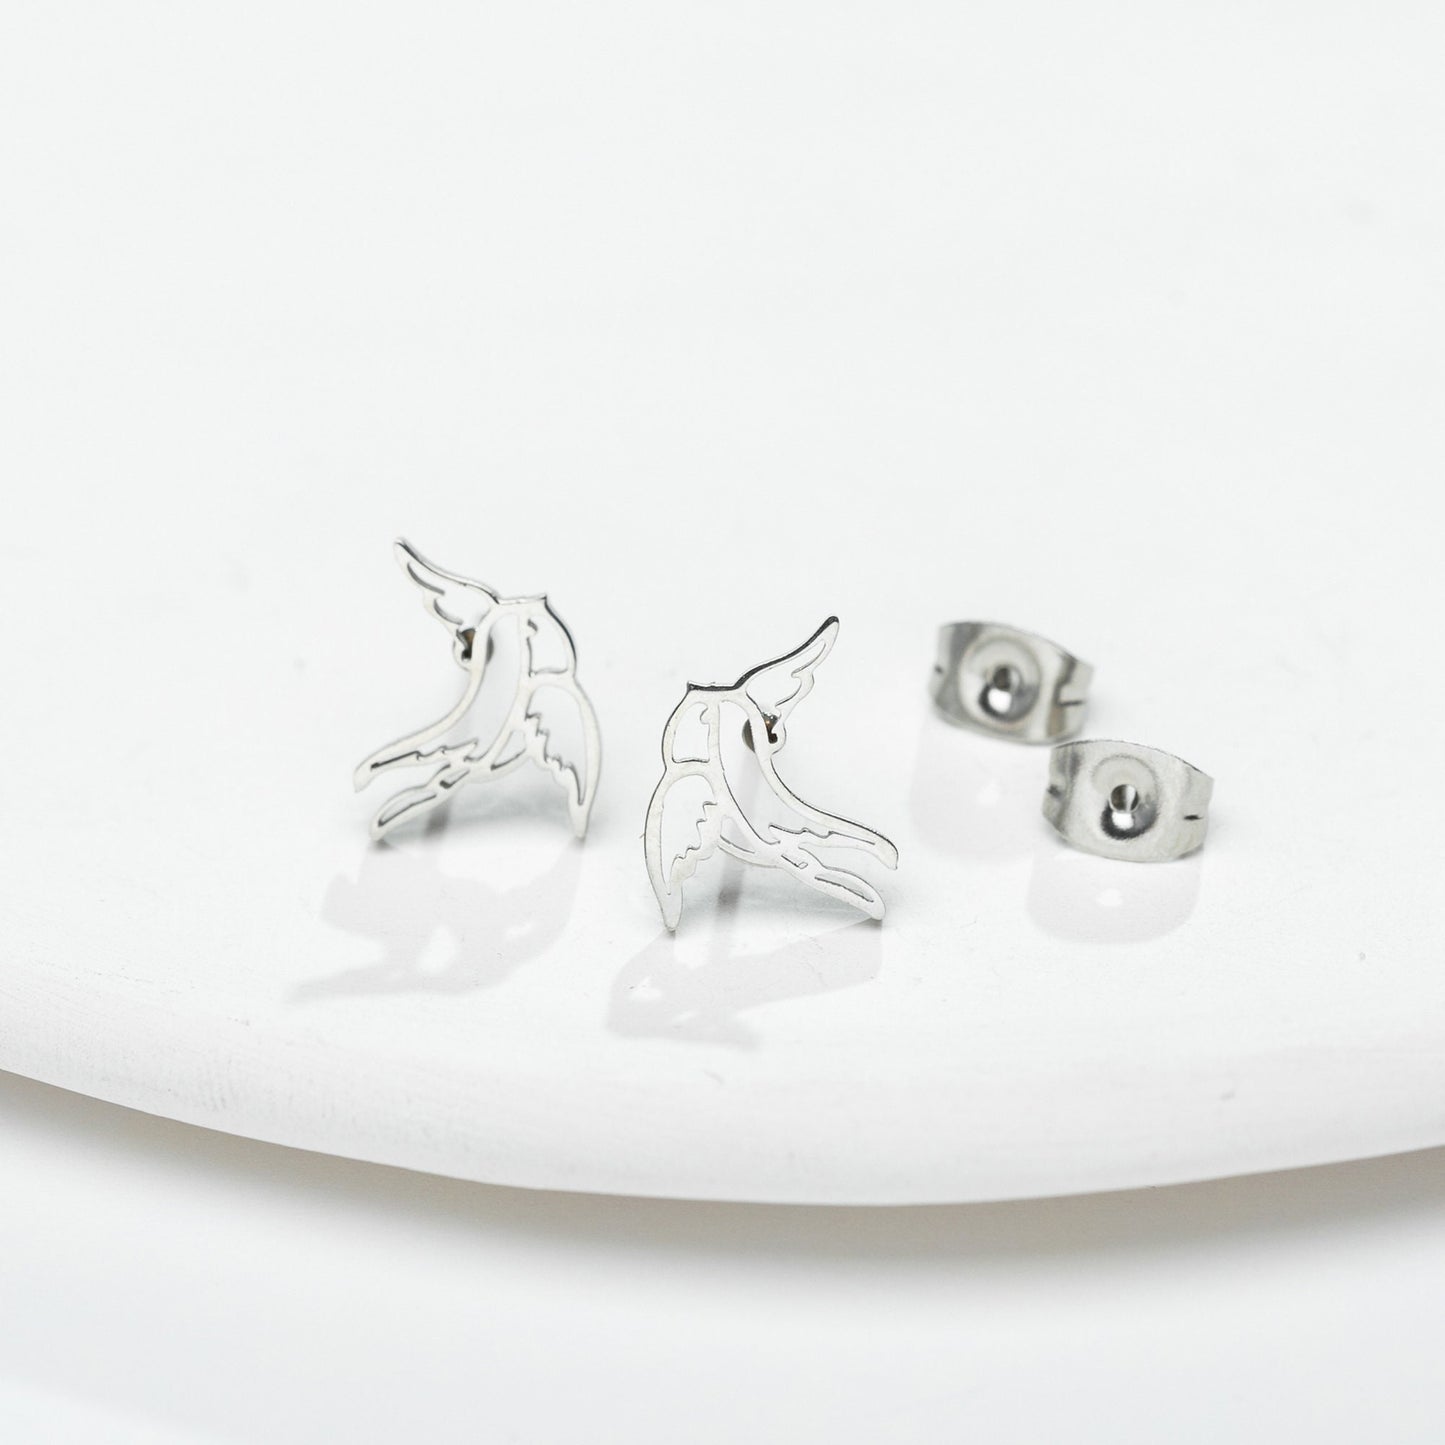 Titanium Bird Stud Earrings, Non Tarnish Earrings, Implant Grade Titanium Waterproof Earrings, Vintage Style Earrings, Minimal Earrings